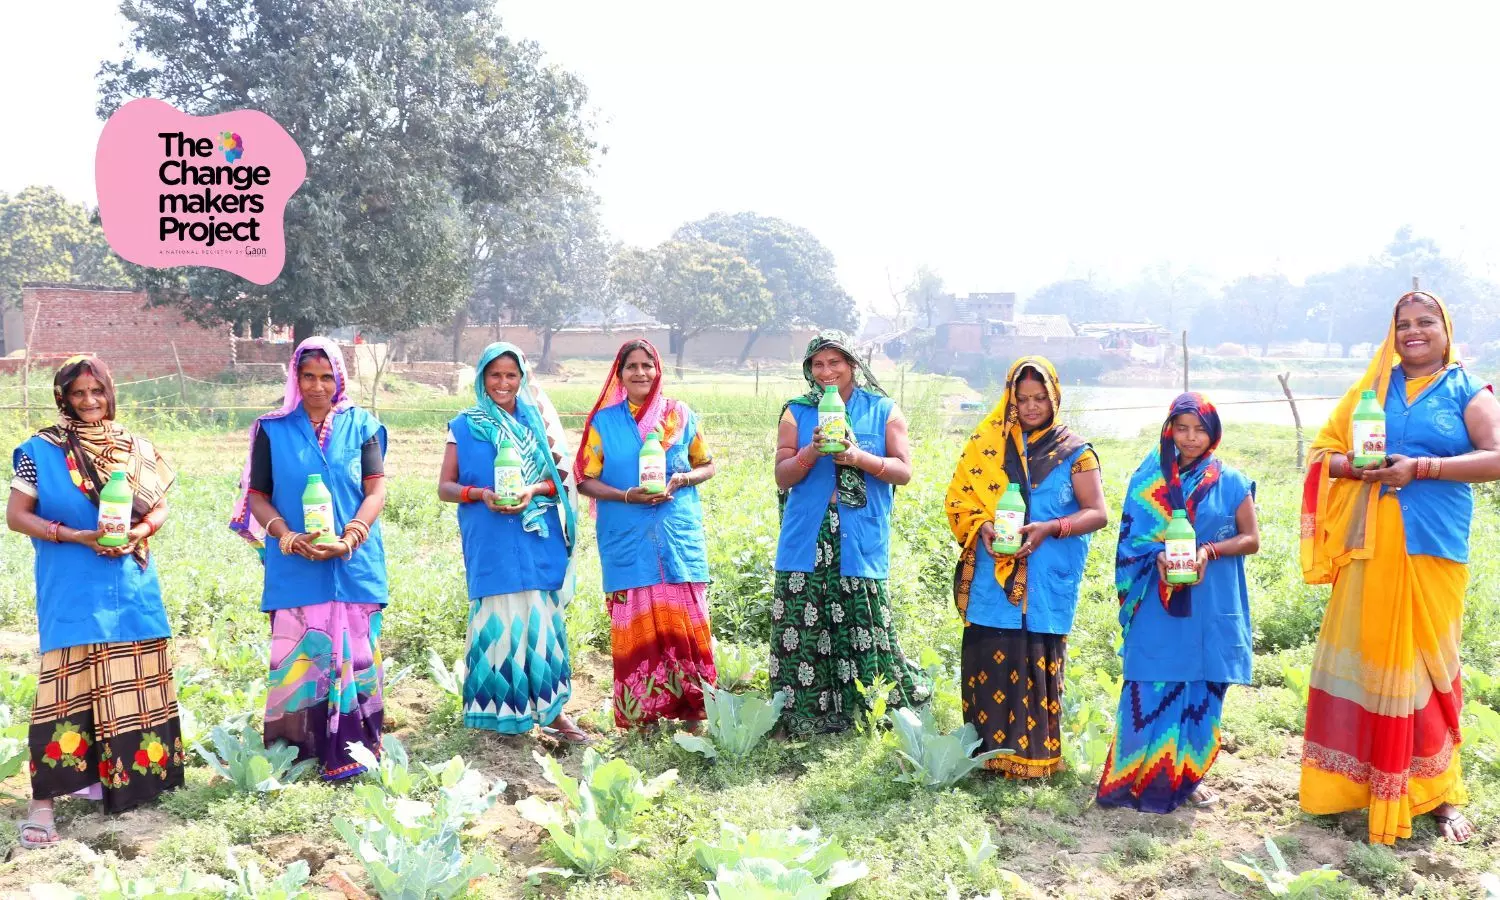 Cowdung, neem, mahua & ginger-garlic-onion — Rural women turn entrepreneurs with farm bio products